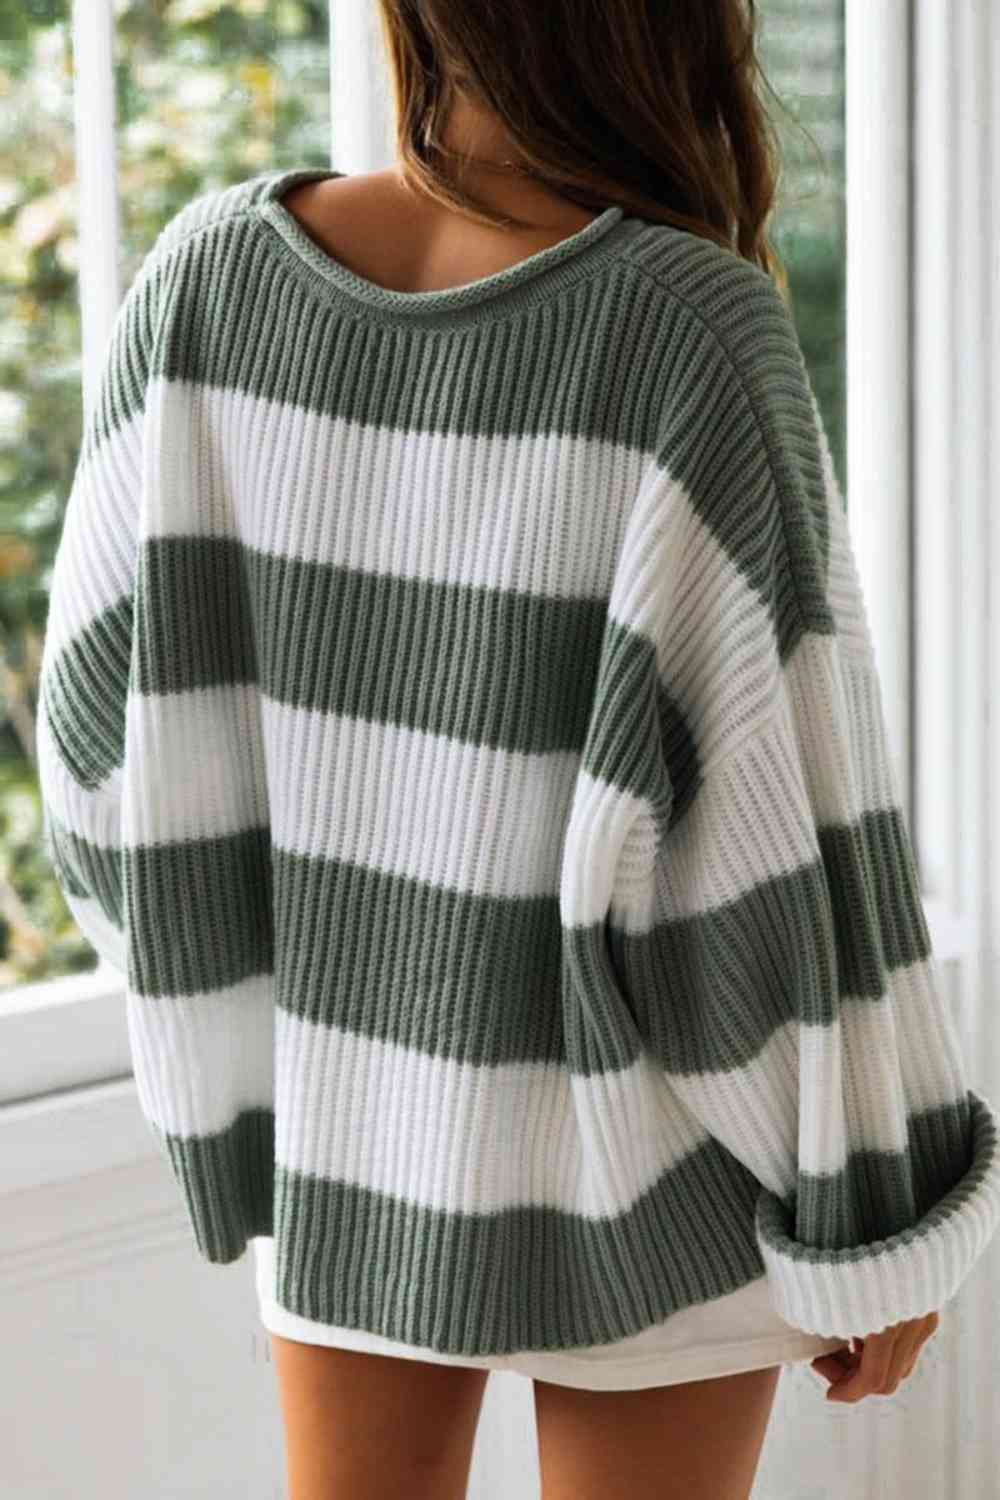 Trendsi sweater Gypsy Tarah Striped Sweater